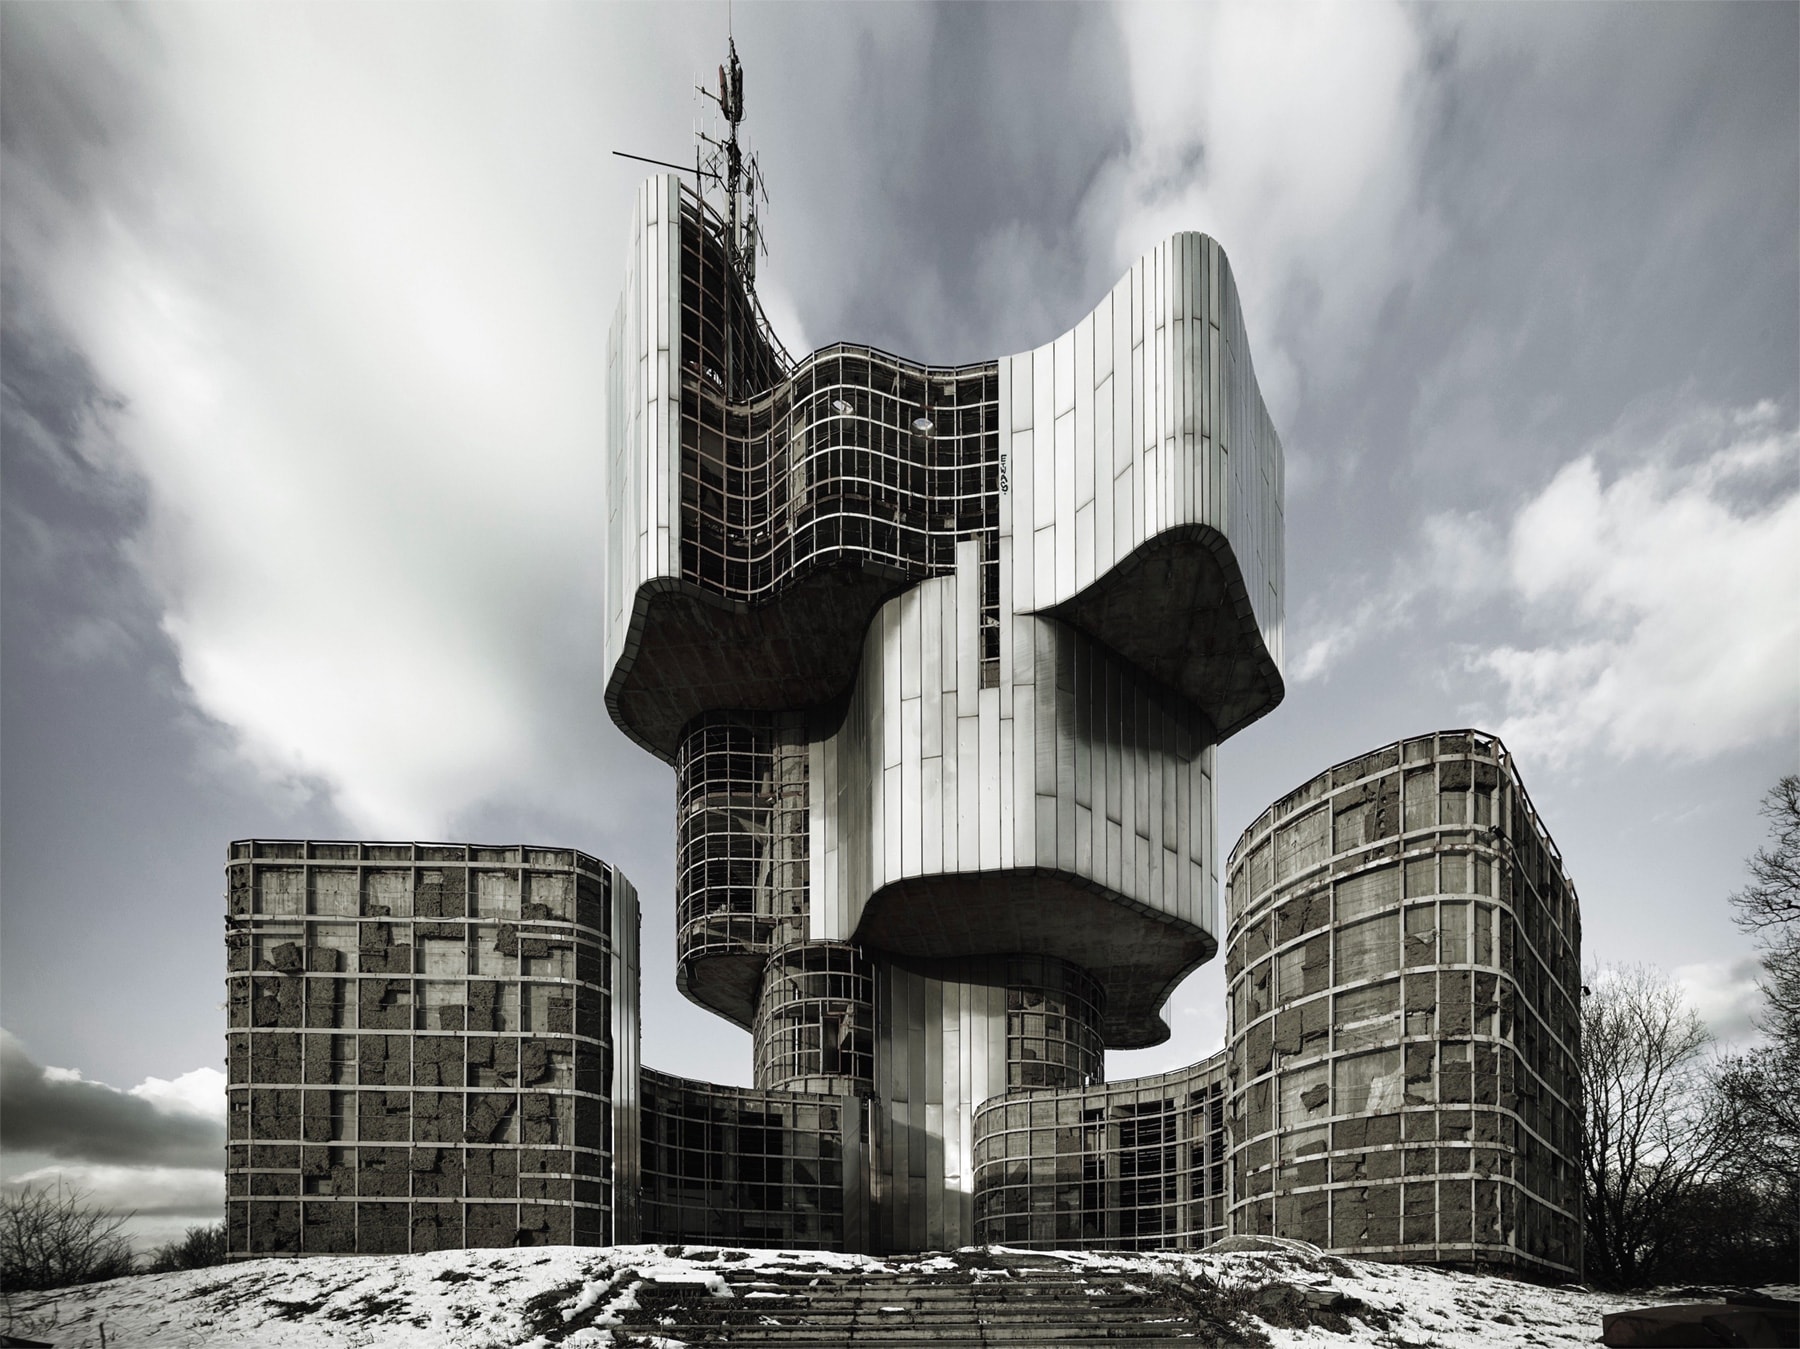 MoMA "Toward a Concrete Utopia" Exhibition yugoslavian modern architecture concrete buildings spomeniks museum of modern art new york